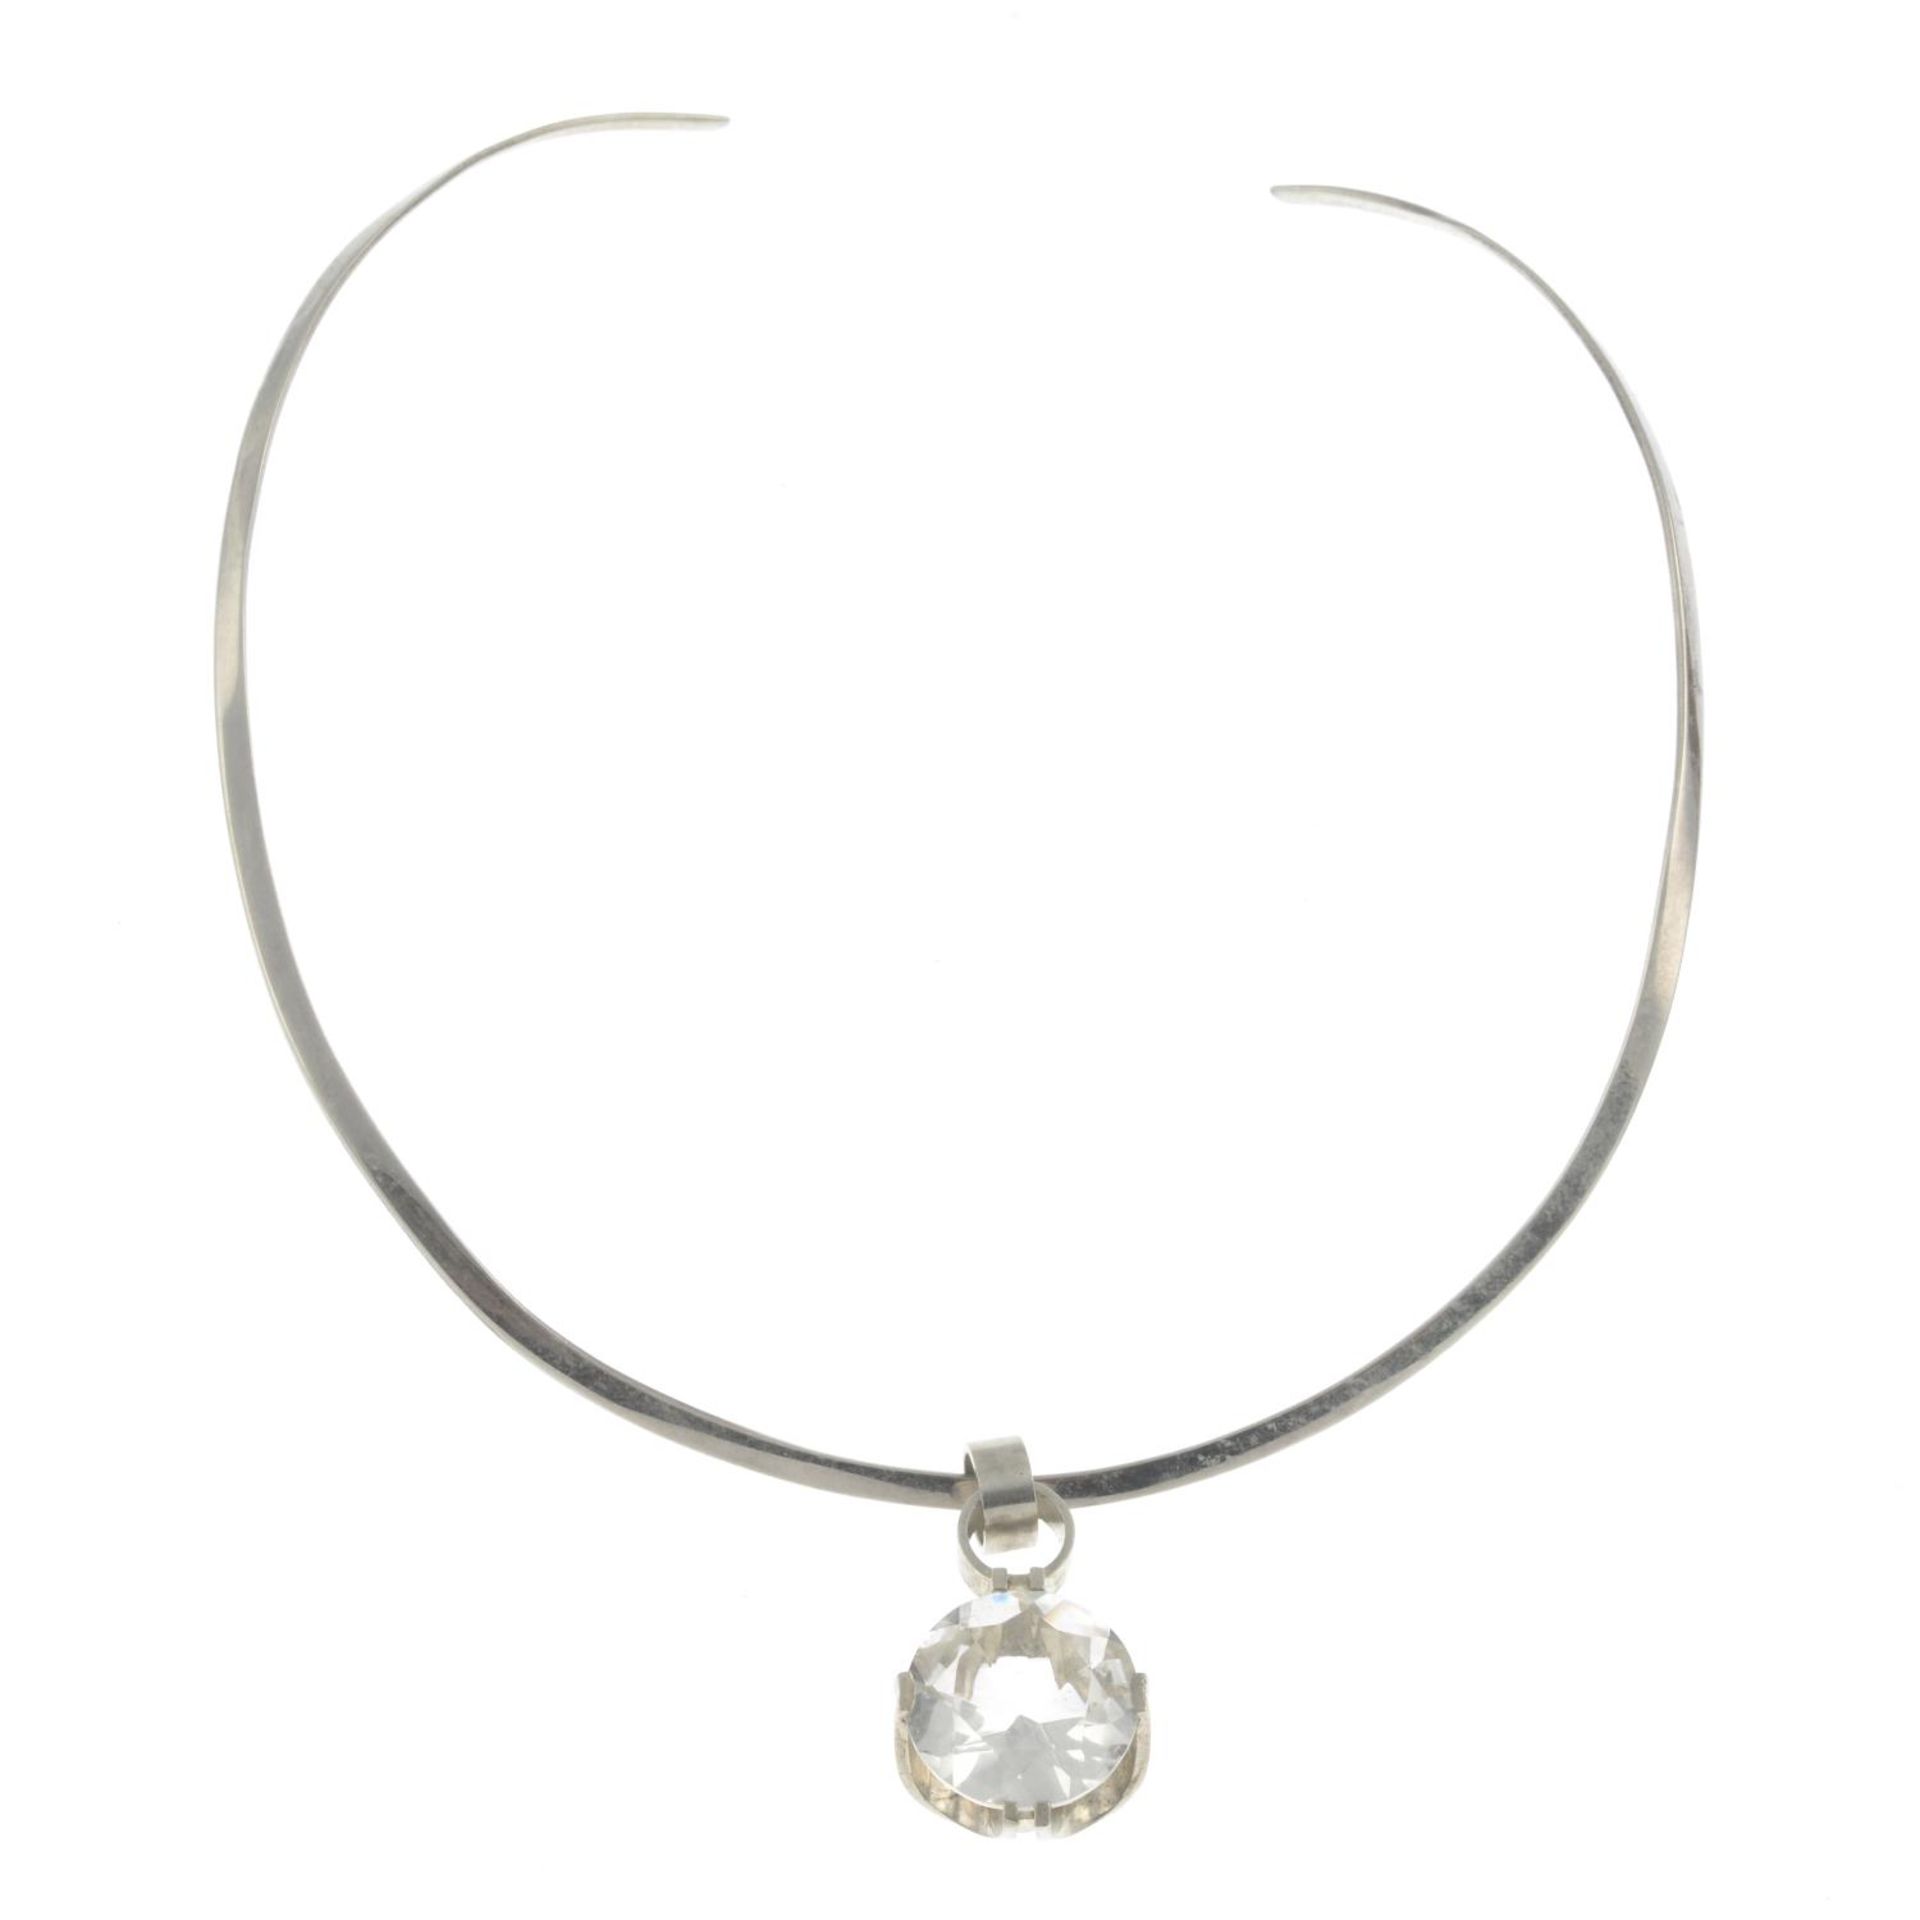 A silver quartz pendant, - Image 2 of 2